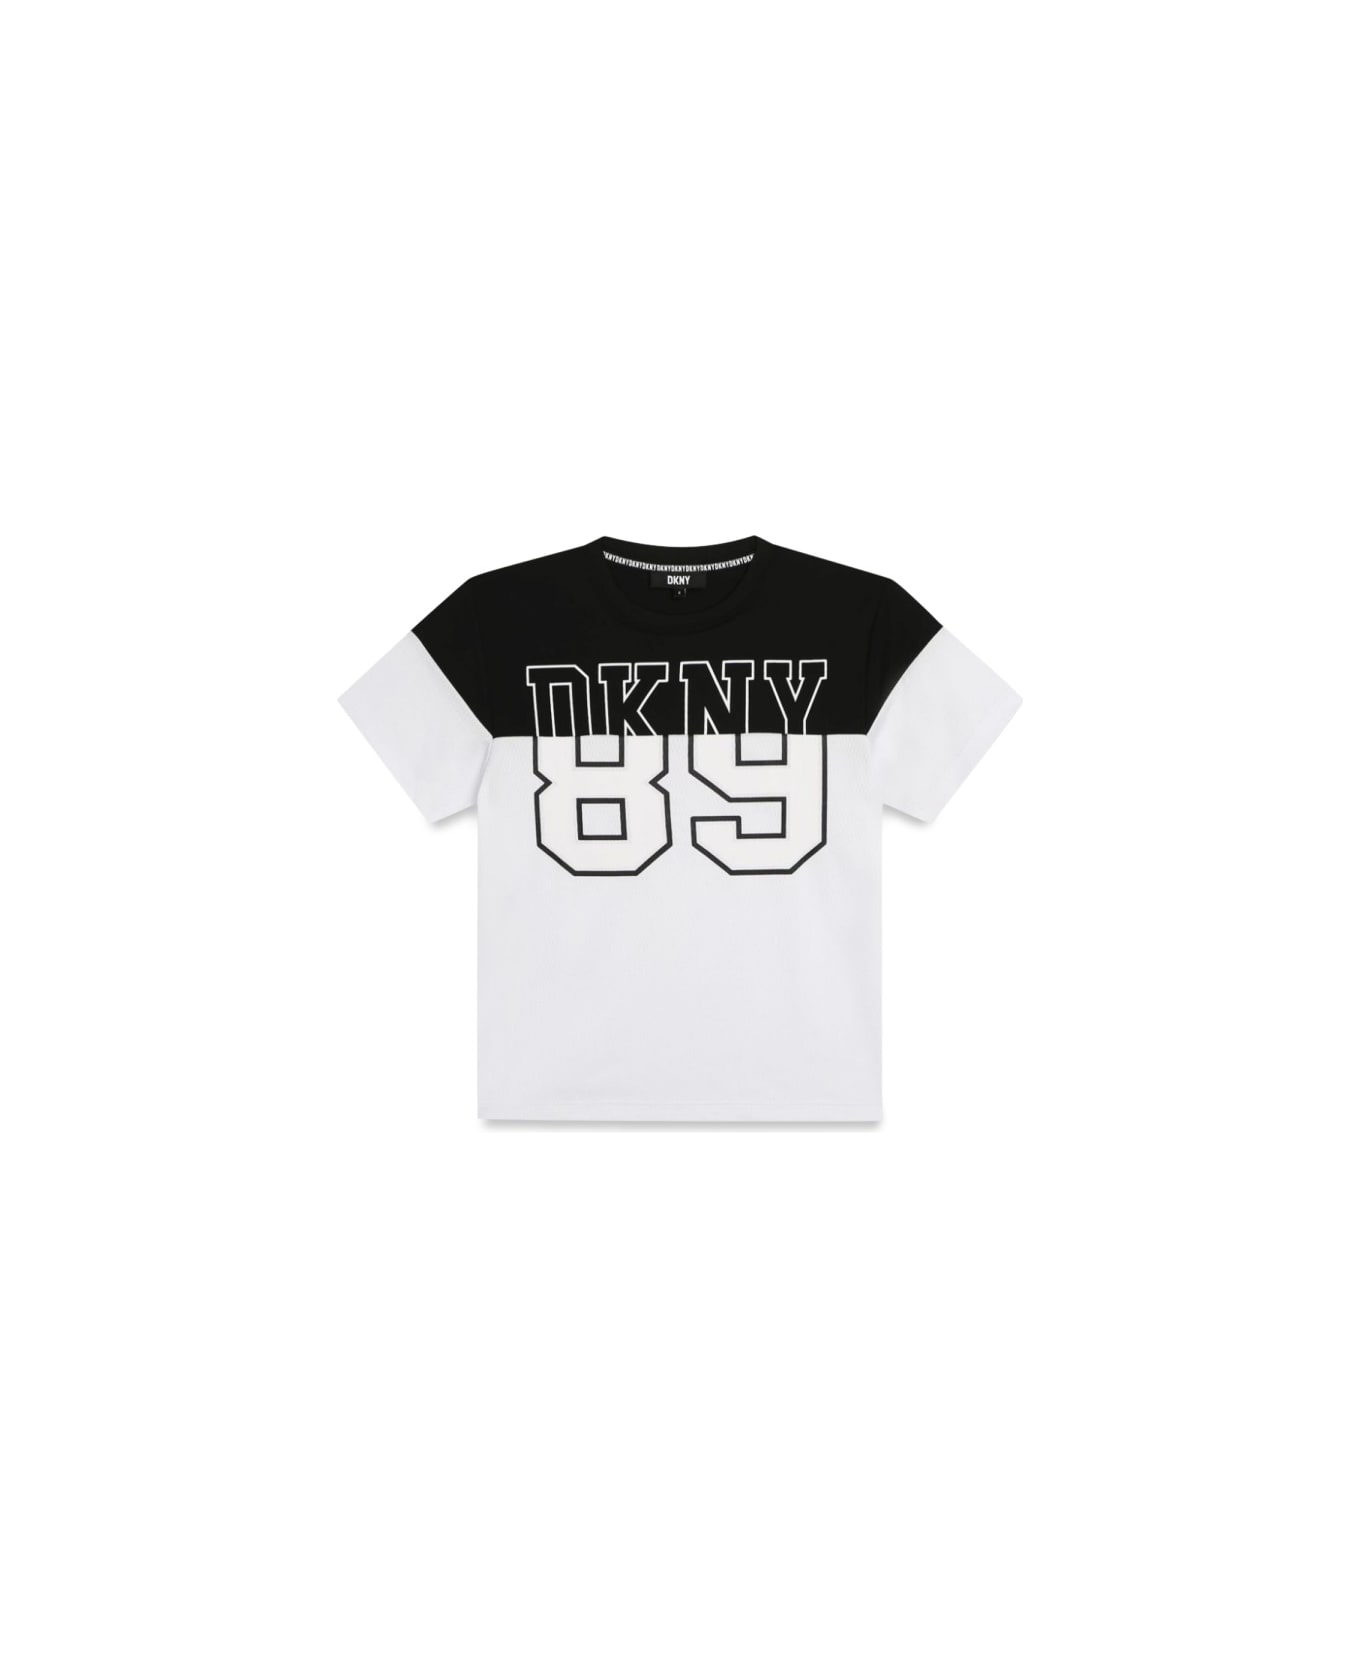 DKNY Tee Shirt - WHITE